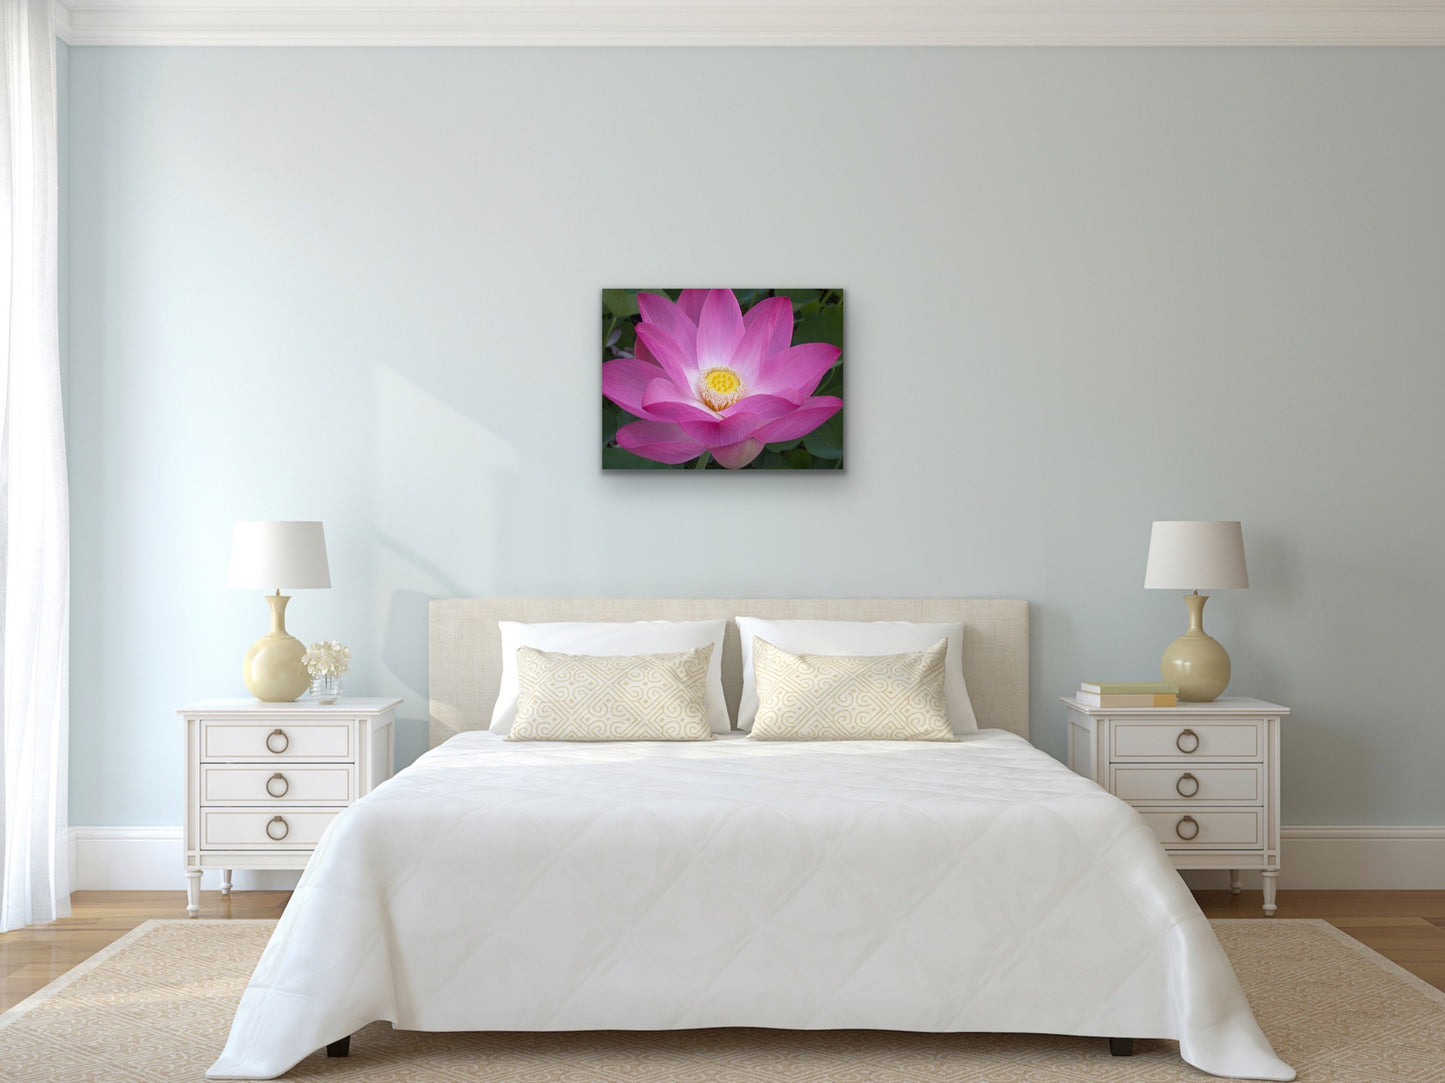 Wall demo of Inspiring Images Hawaii’s pink lotus flower fine art photograph. 